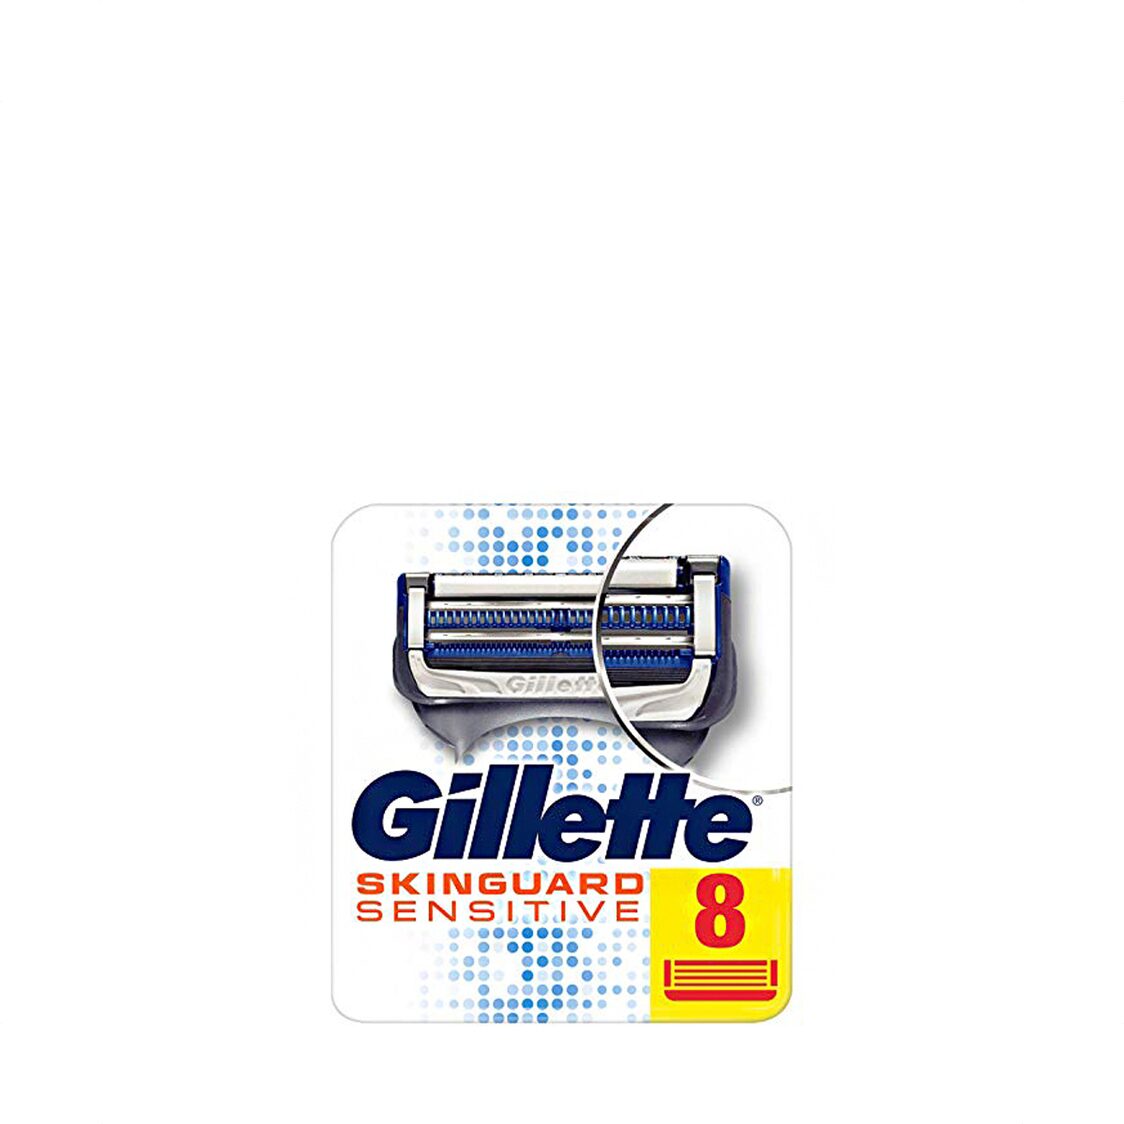 Gillette New Skinguard Cartridge 8S